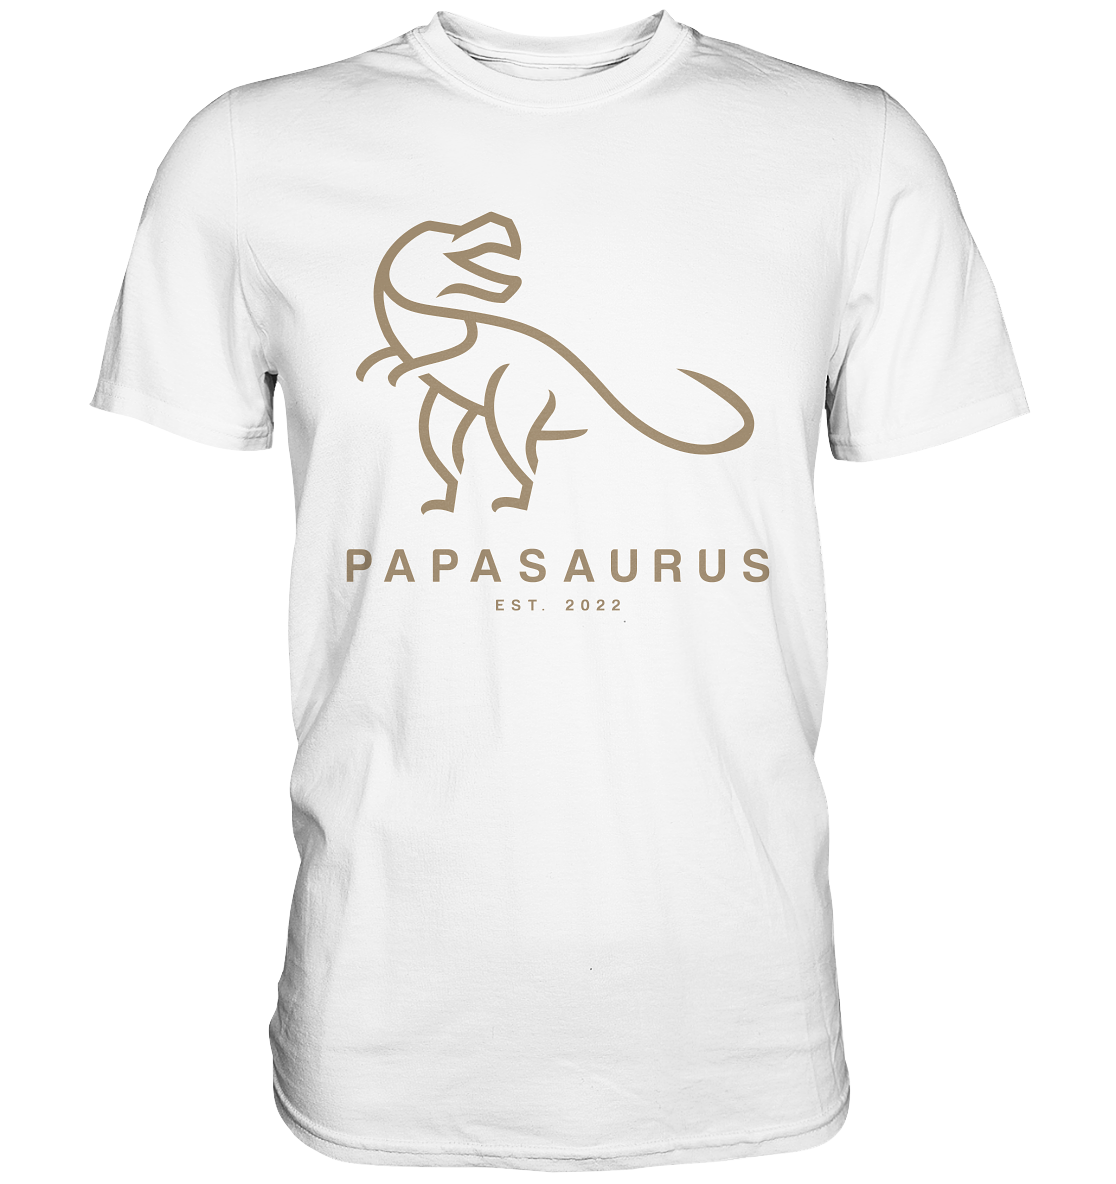 Papasaurus - Premium Shirt